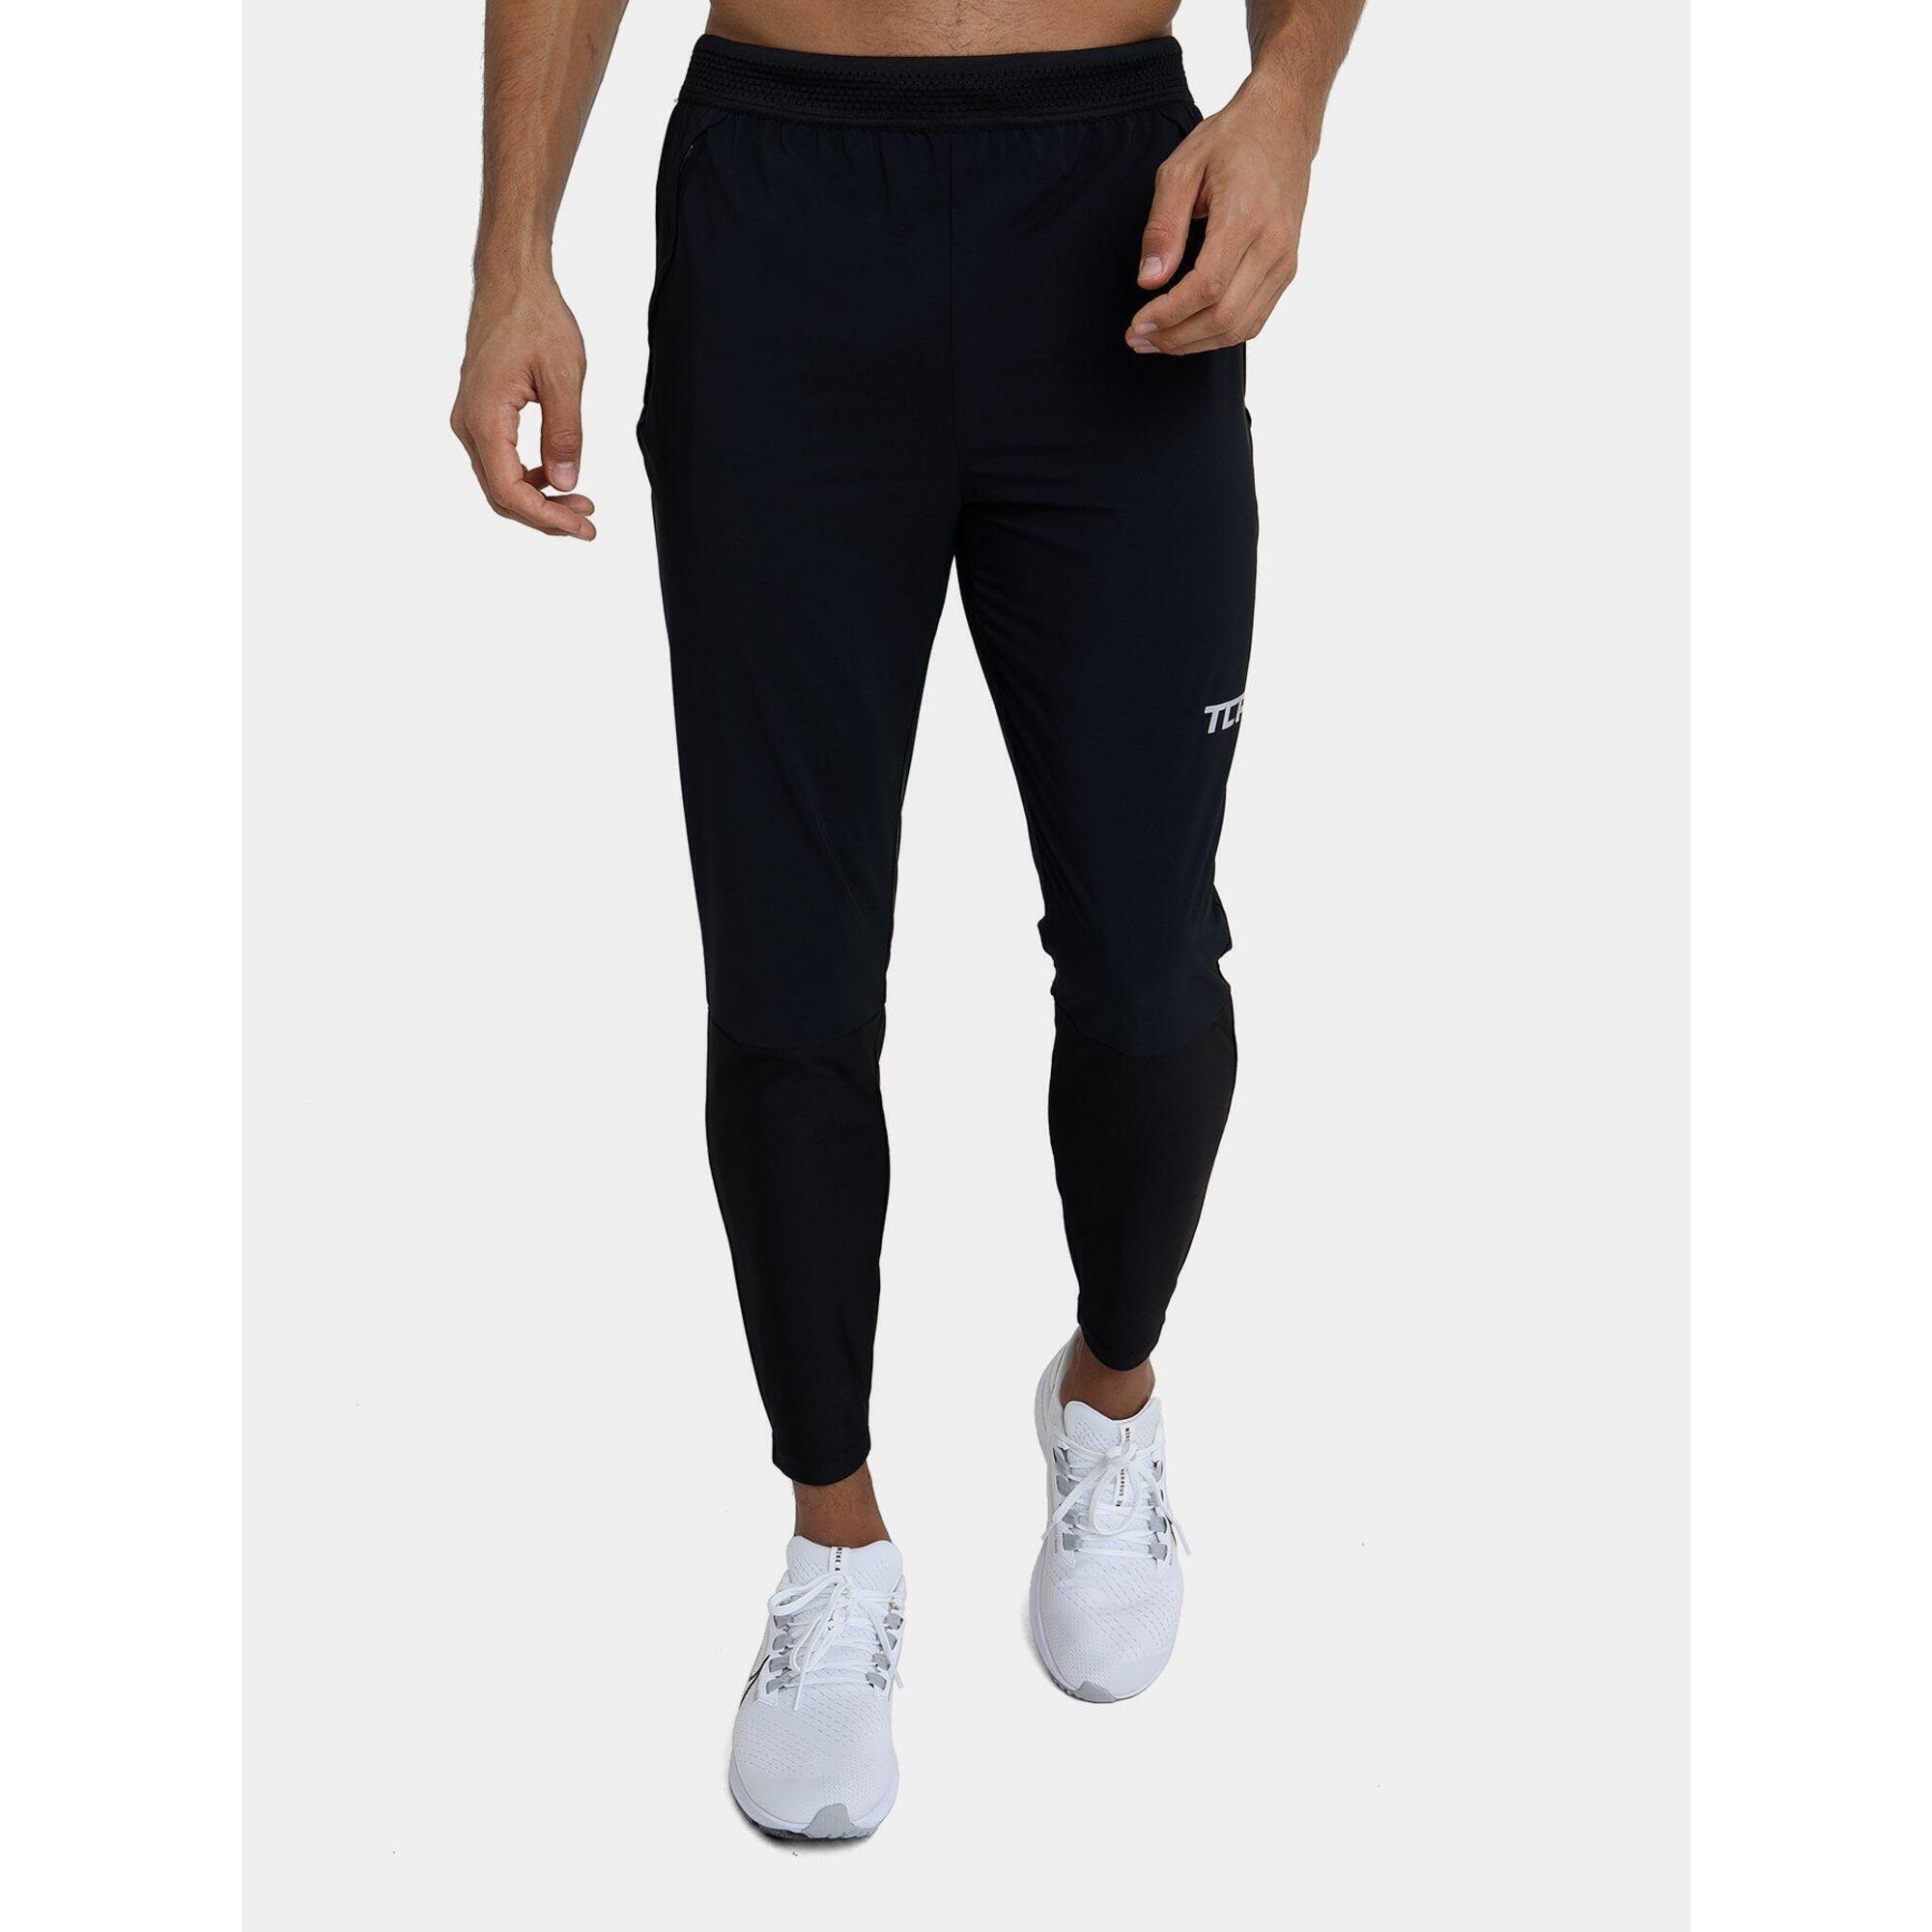 Adidas track pants mens M medium black white 3 stripe logo jogger running |  eBay